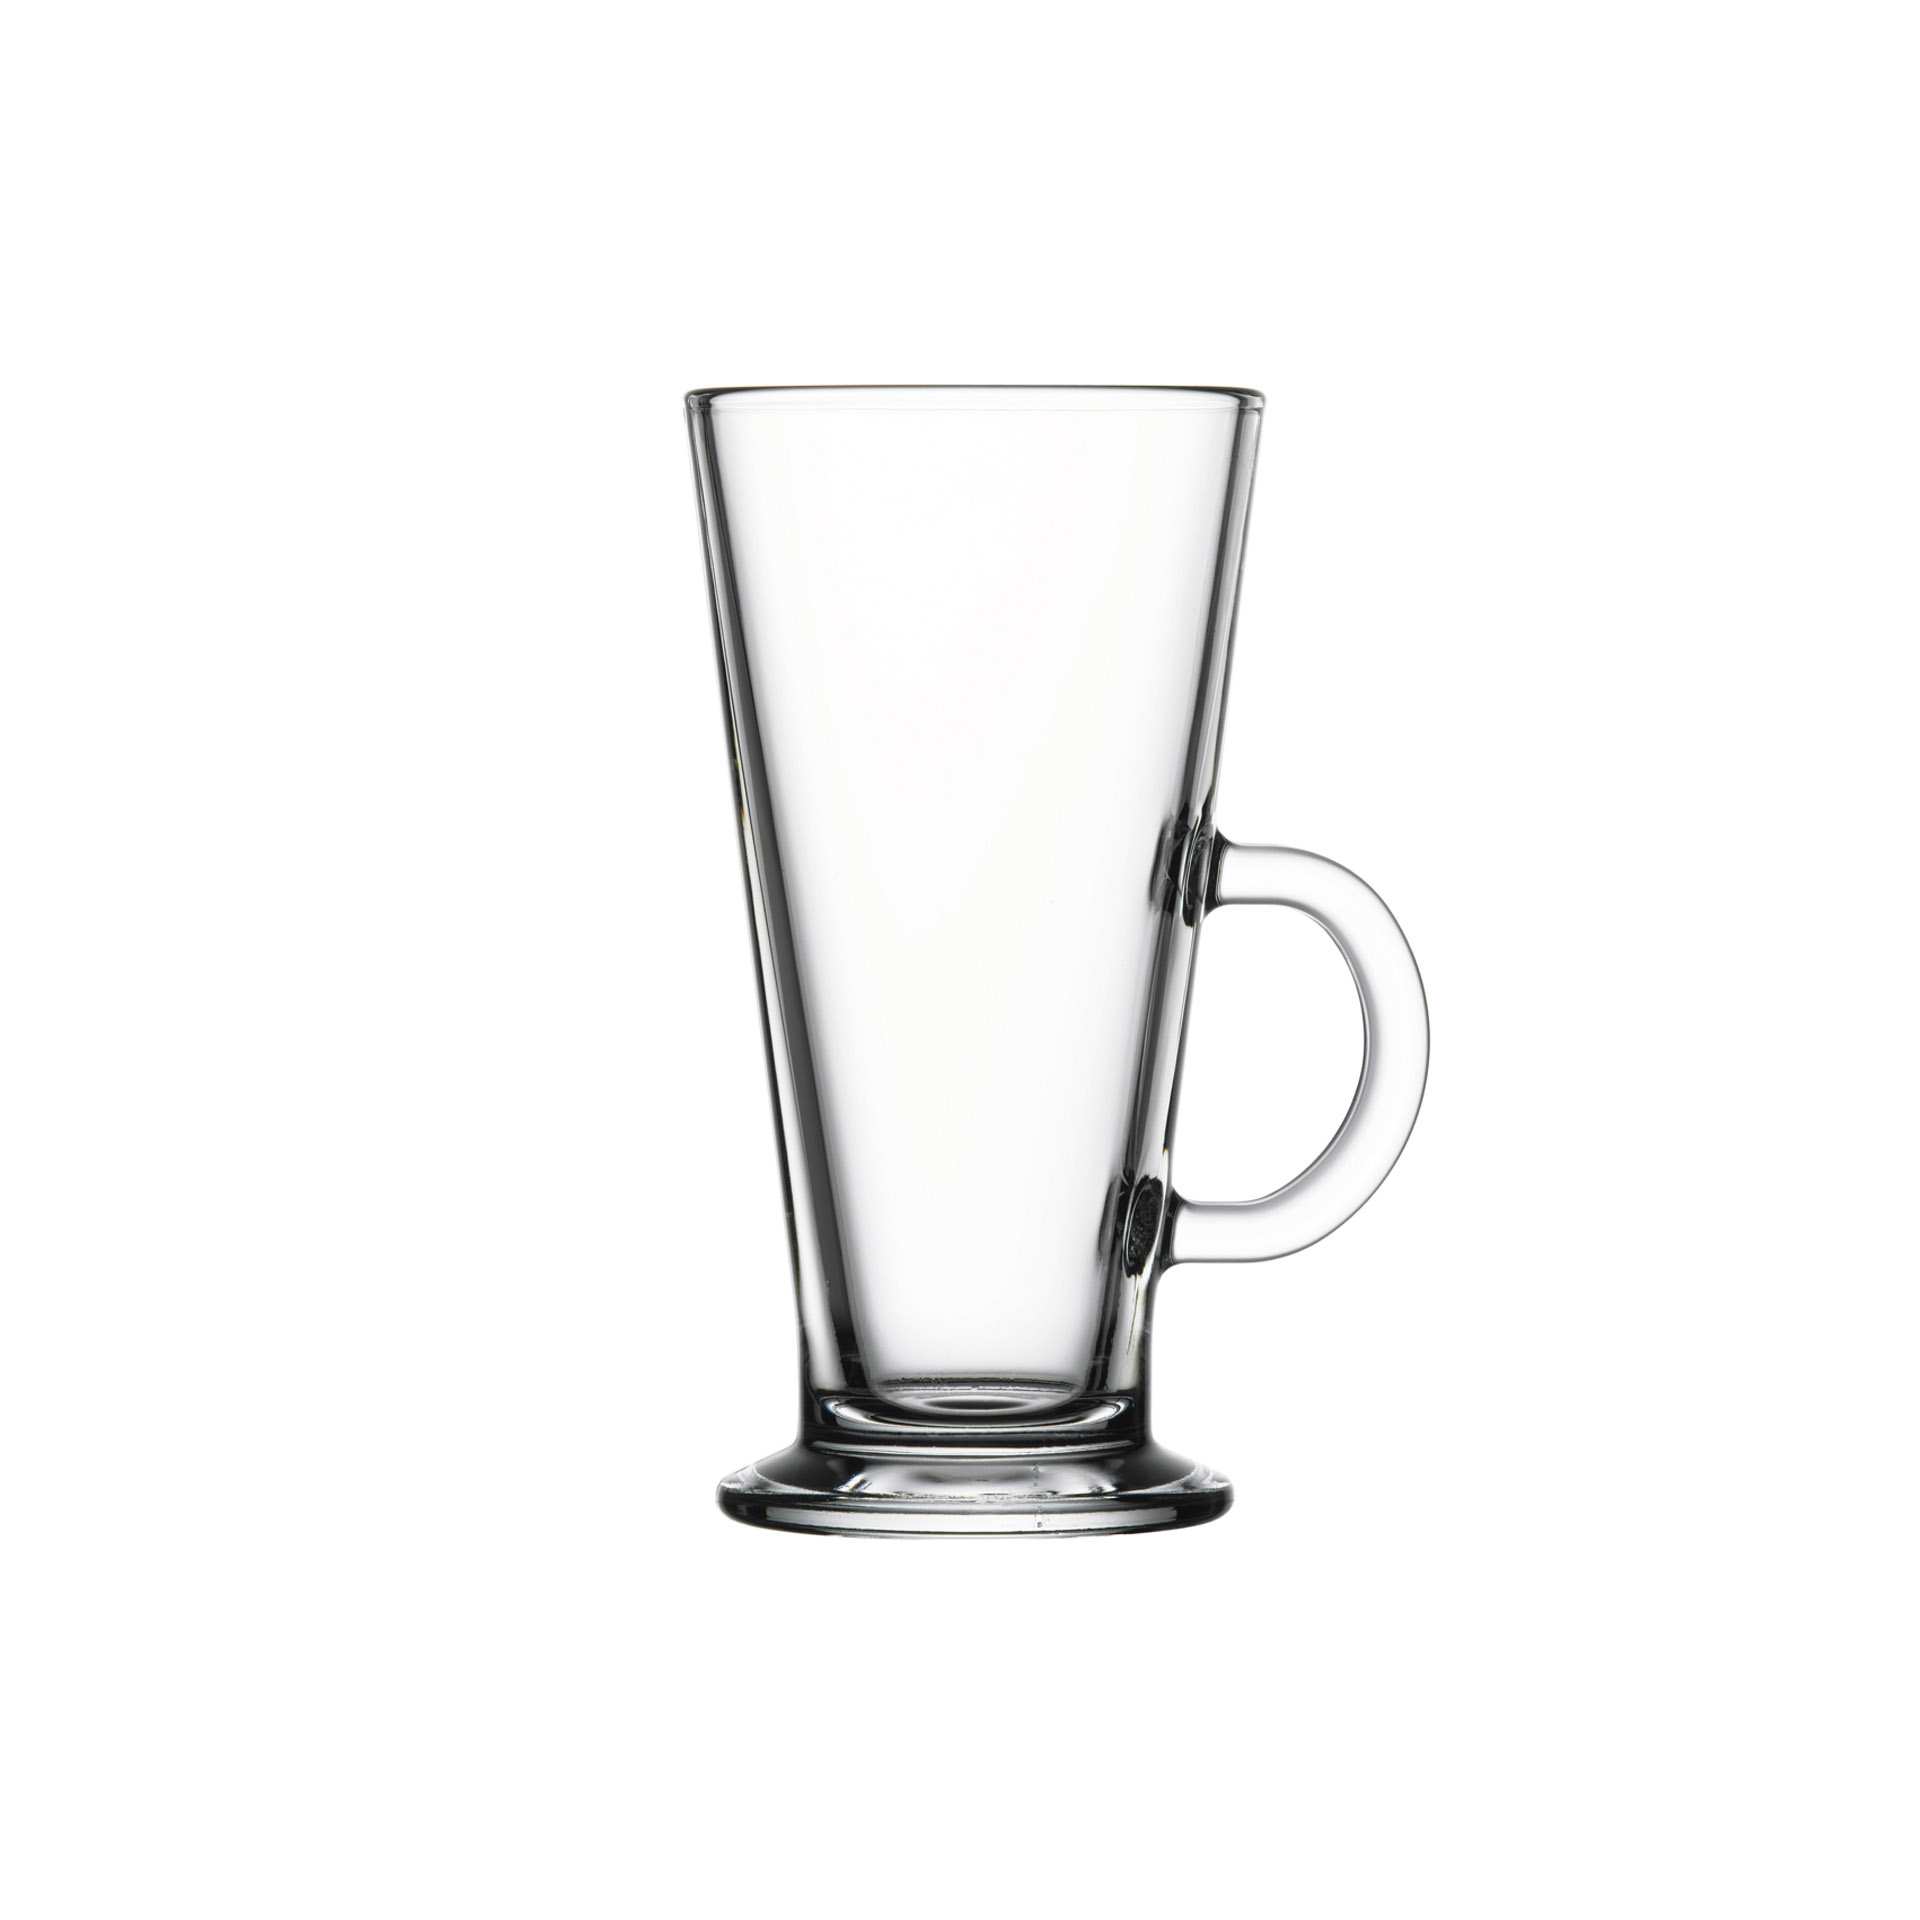 Henkelglas - Set á 12 Stück - Serie Colombian - Höhe 14,8 cm - Ø oben / unten 7,65 / 6,8 cm - Inhalt 0,263 l - Glas - 55861-A